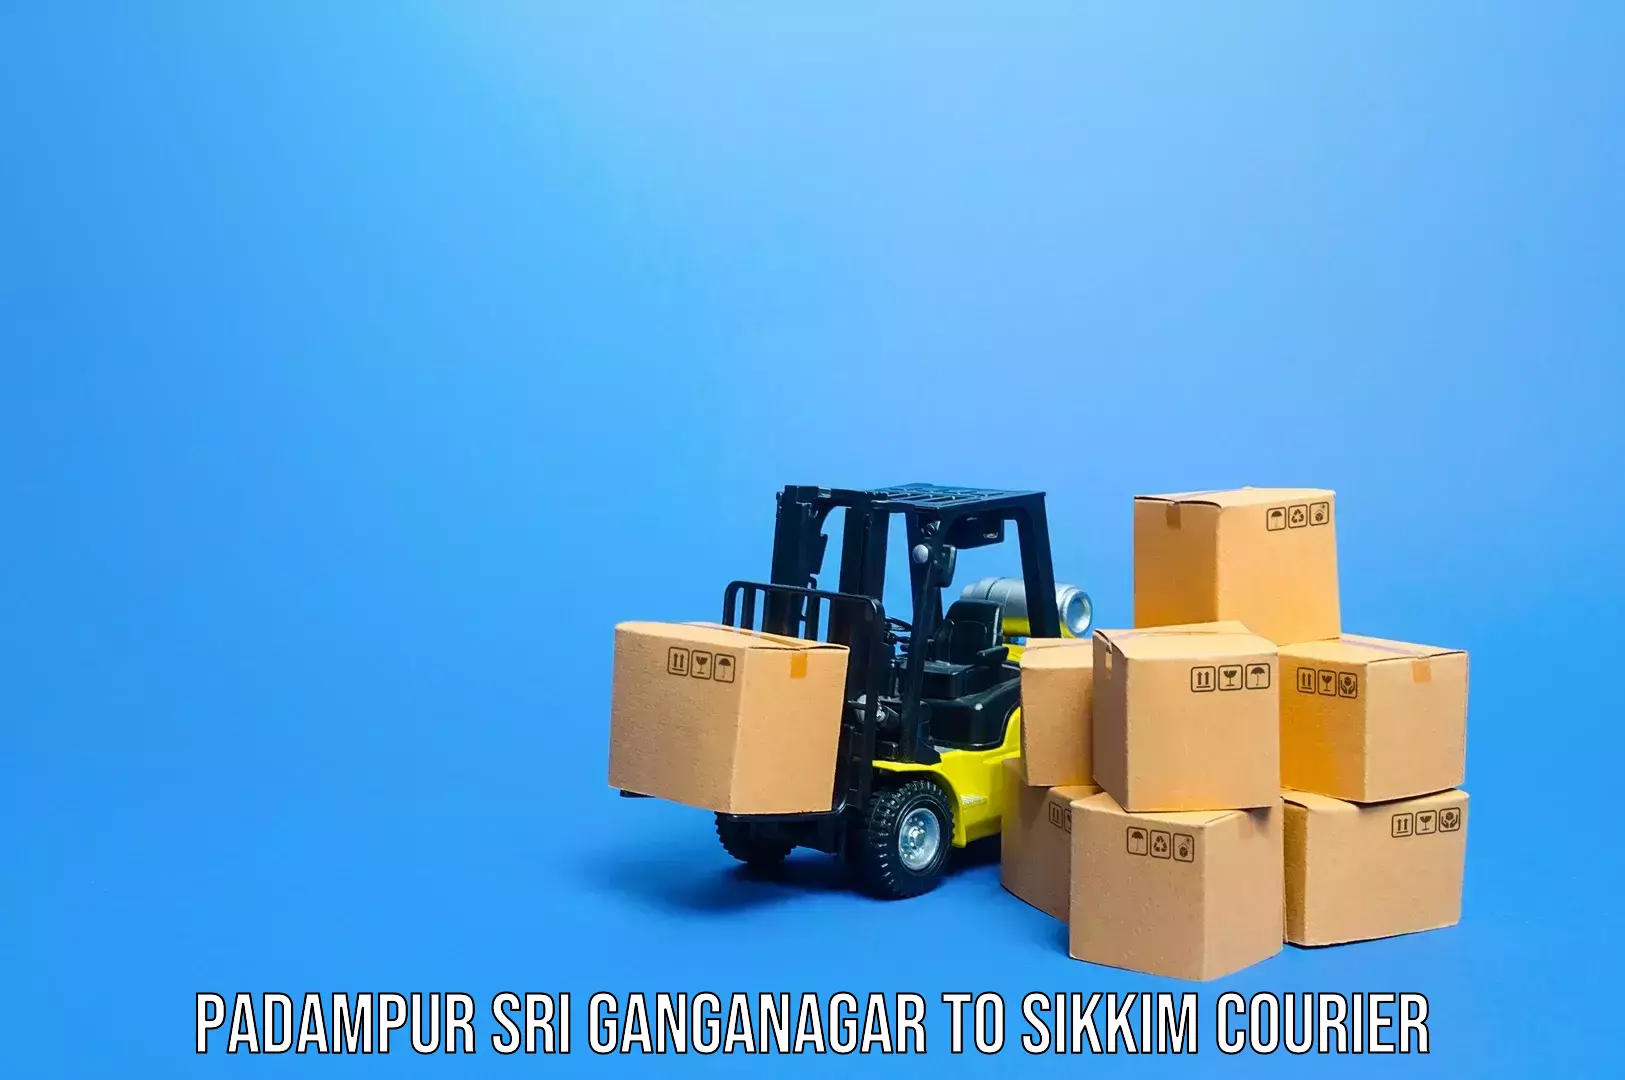 Luggage shipping specialists Padampur Sri Ganganagar to Geyzing